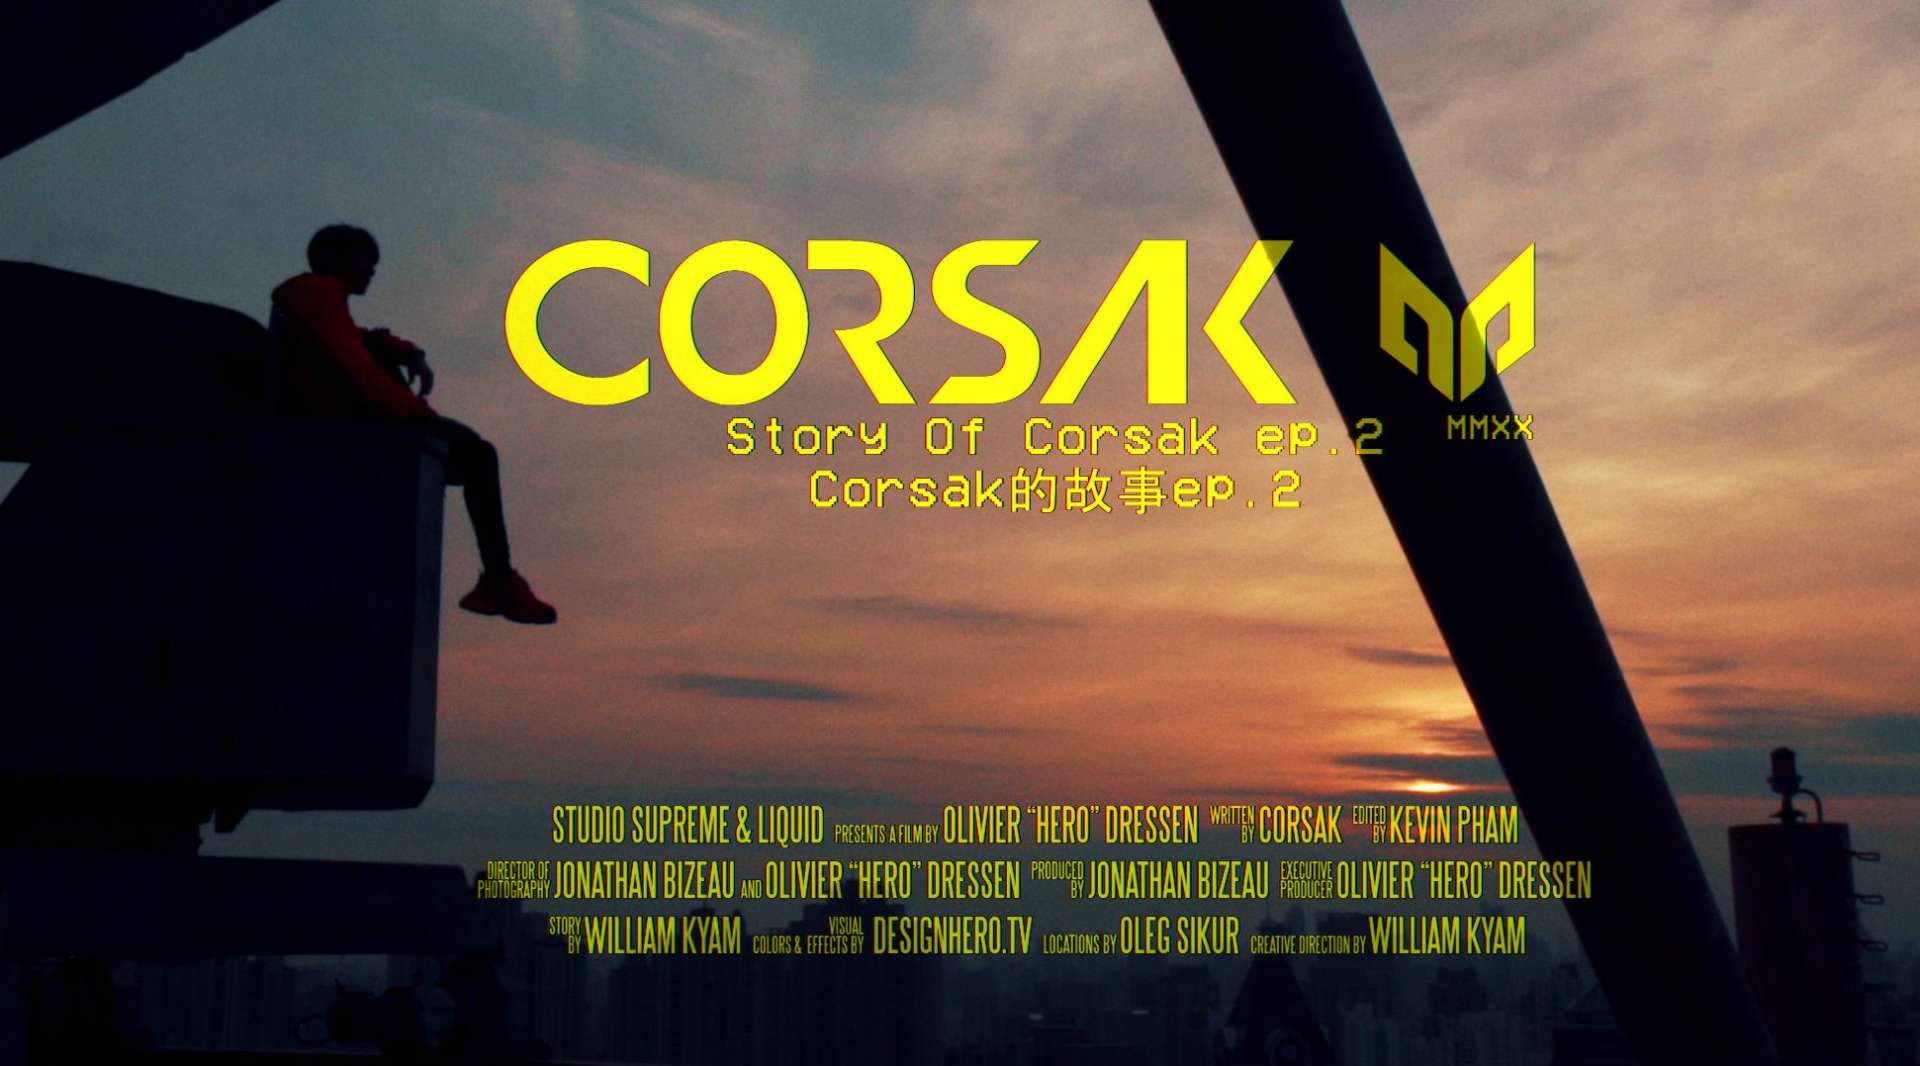 Story Of Corsak ep2. Director’s cut.